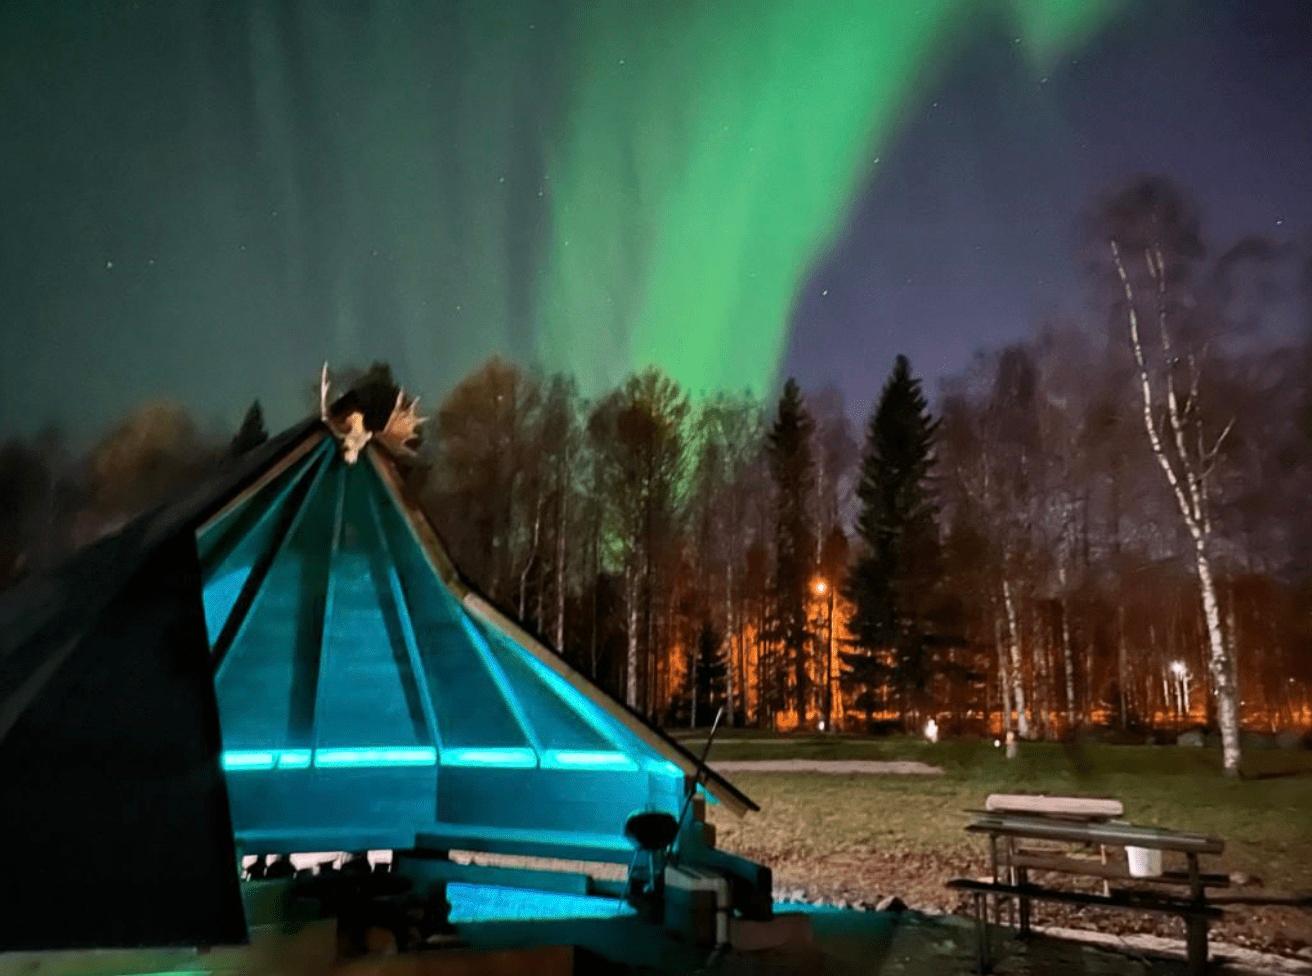 Yöpuu Camping & Hotelli, Kemi, Finland